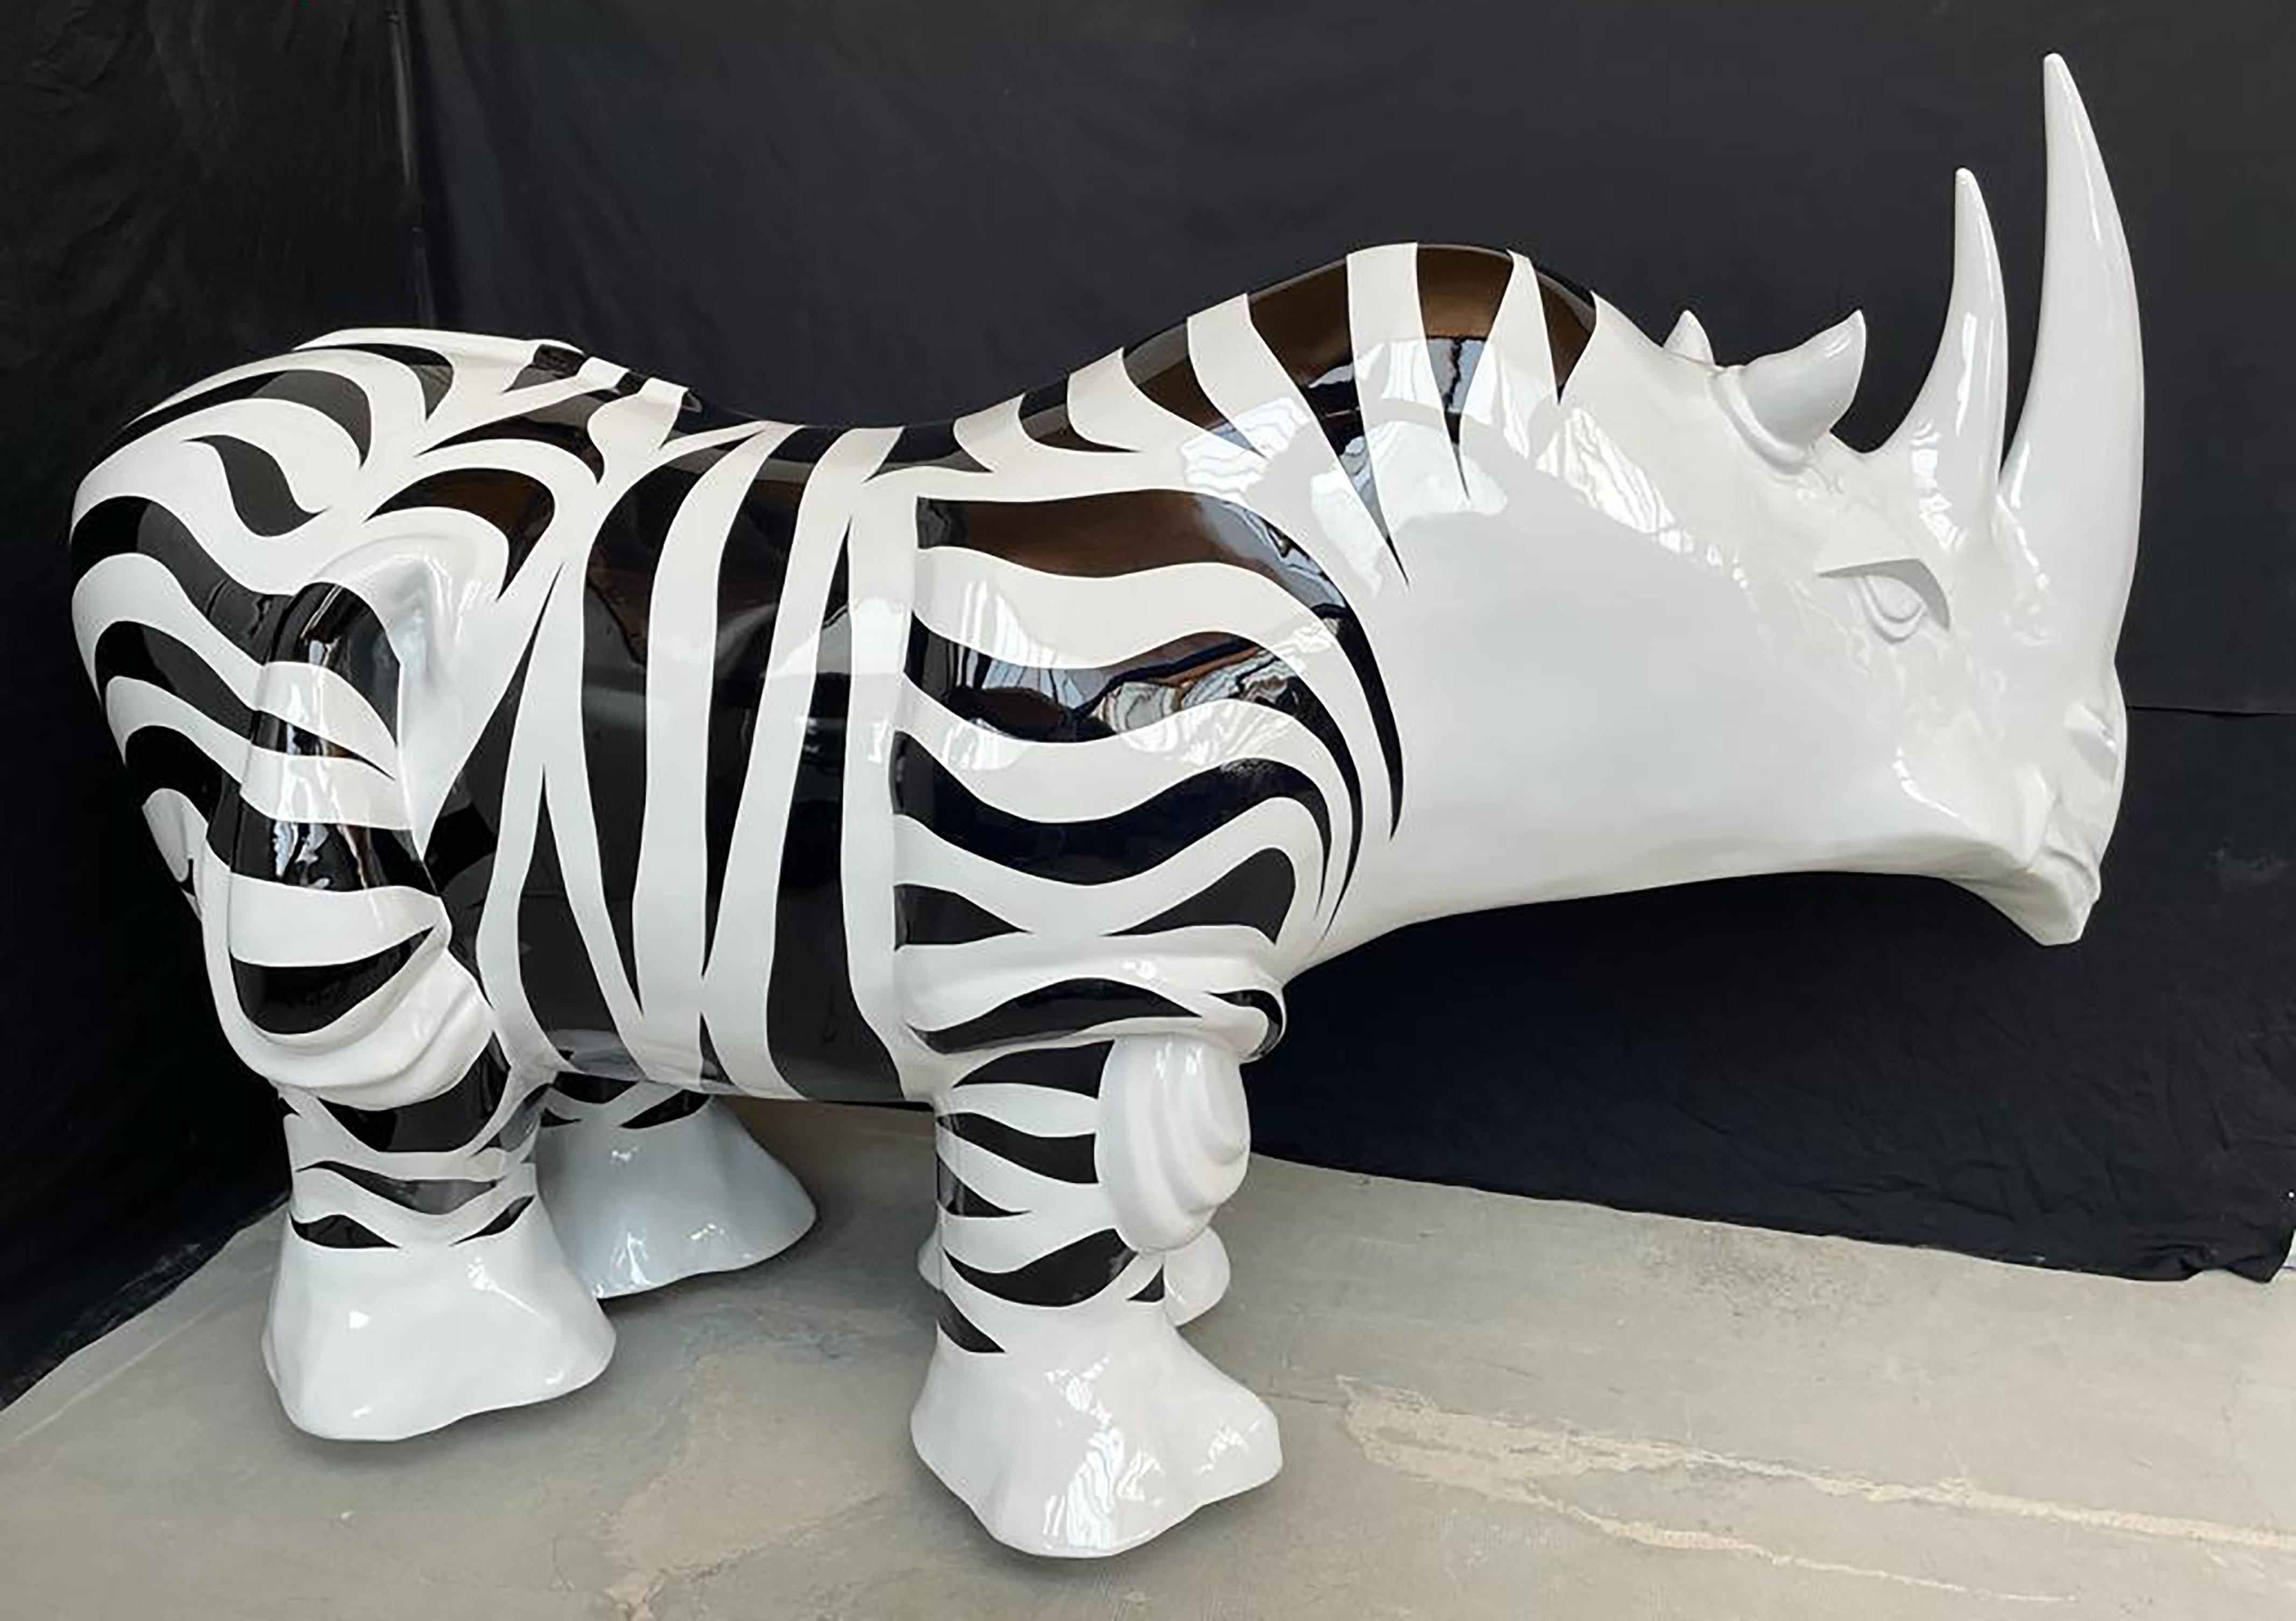 Rhinozebros 120 - Adorned with a zebra skin - Monumental Outdoor Sculpture - Black Figurative Sculpture by Patrick Schumacher